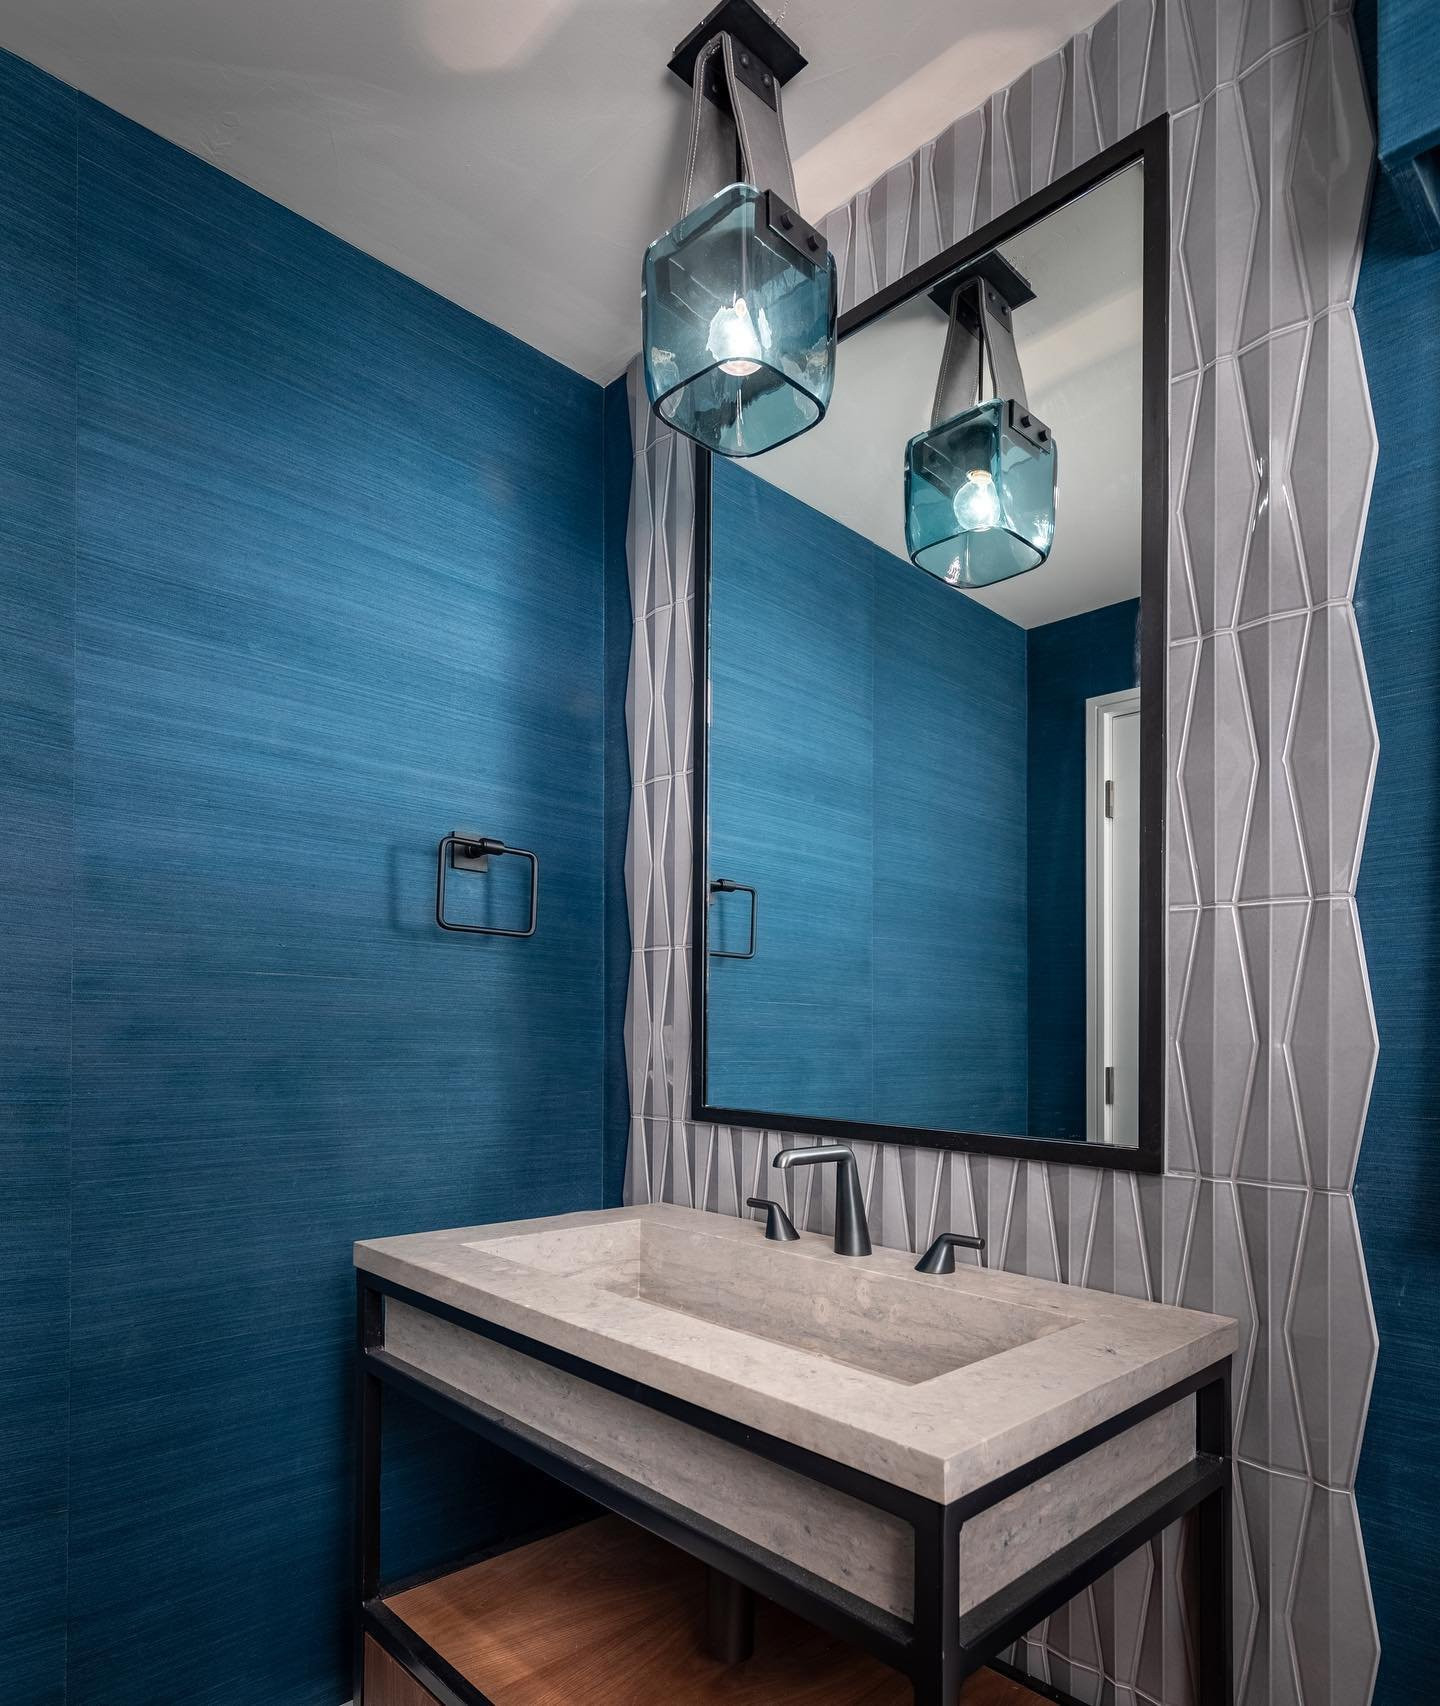 of the Best Bathroom Wallpaper Ideas  Robern